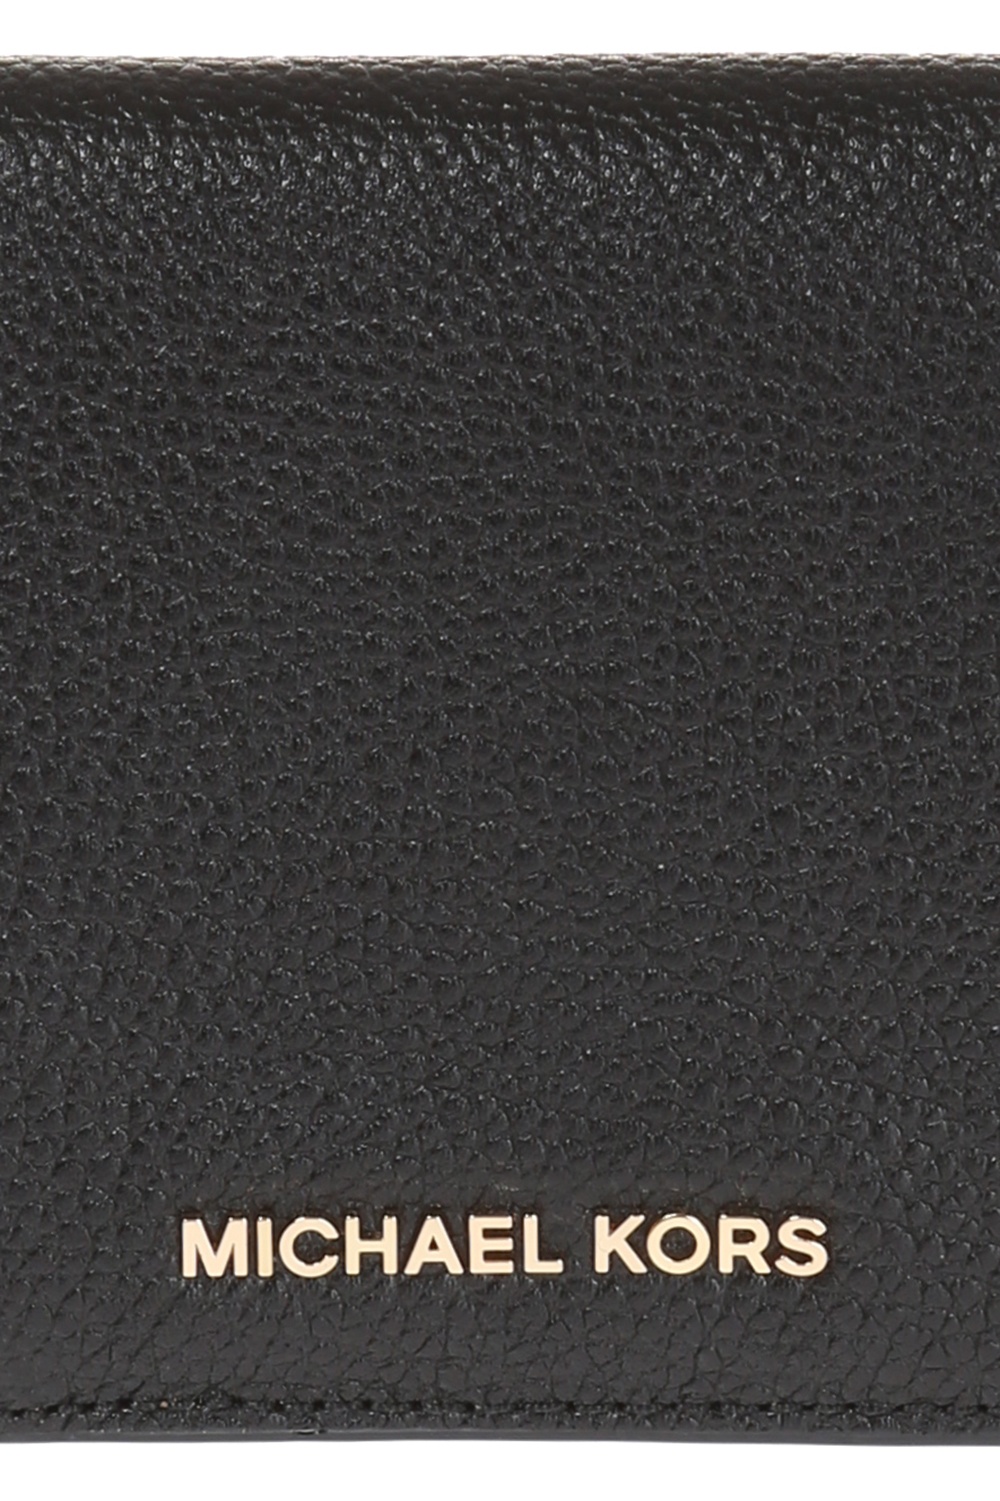 Mercer' wallet Michael Michael Kors 